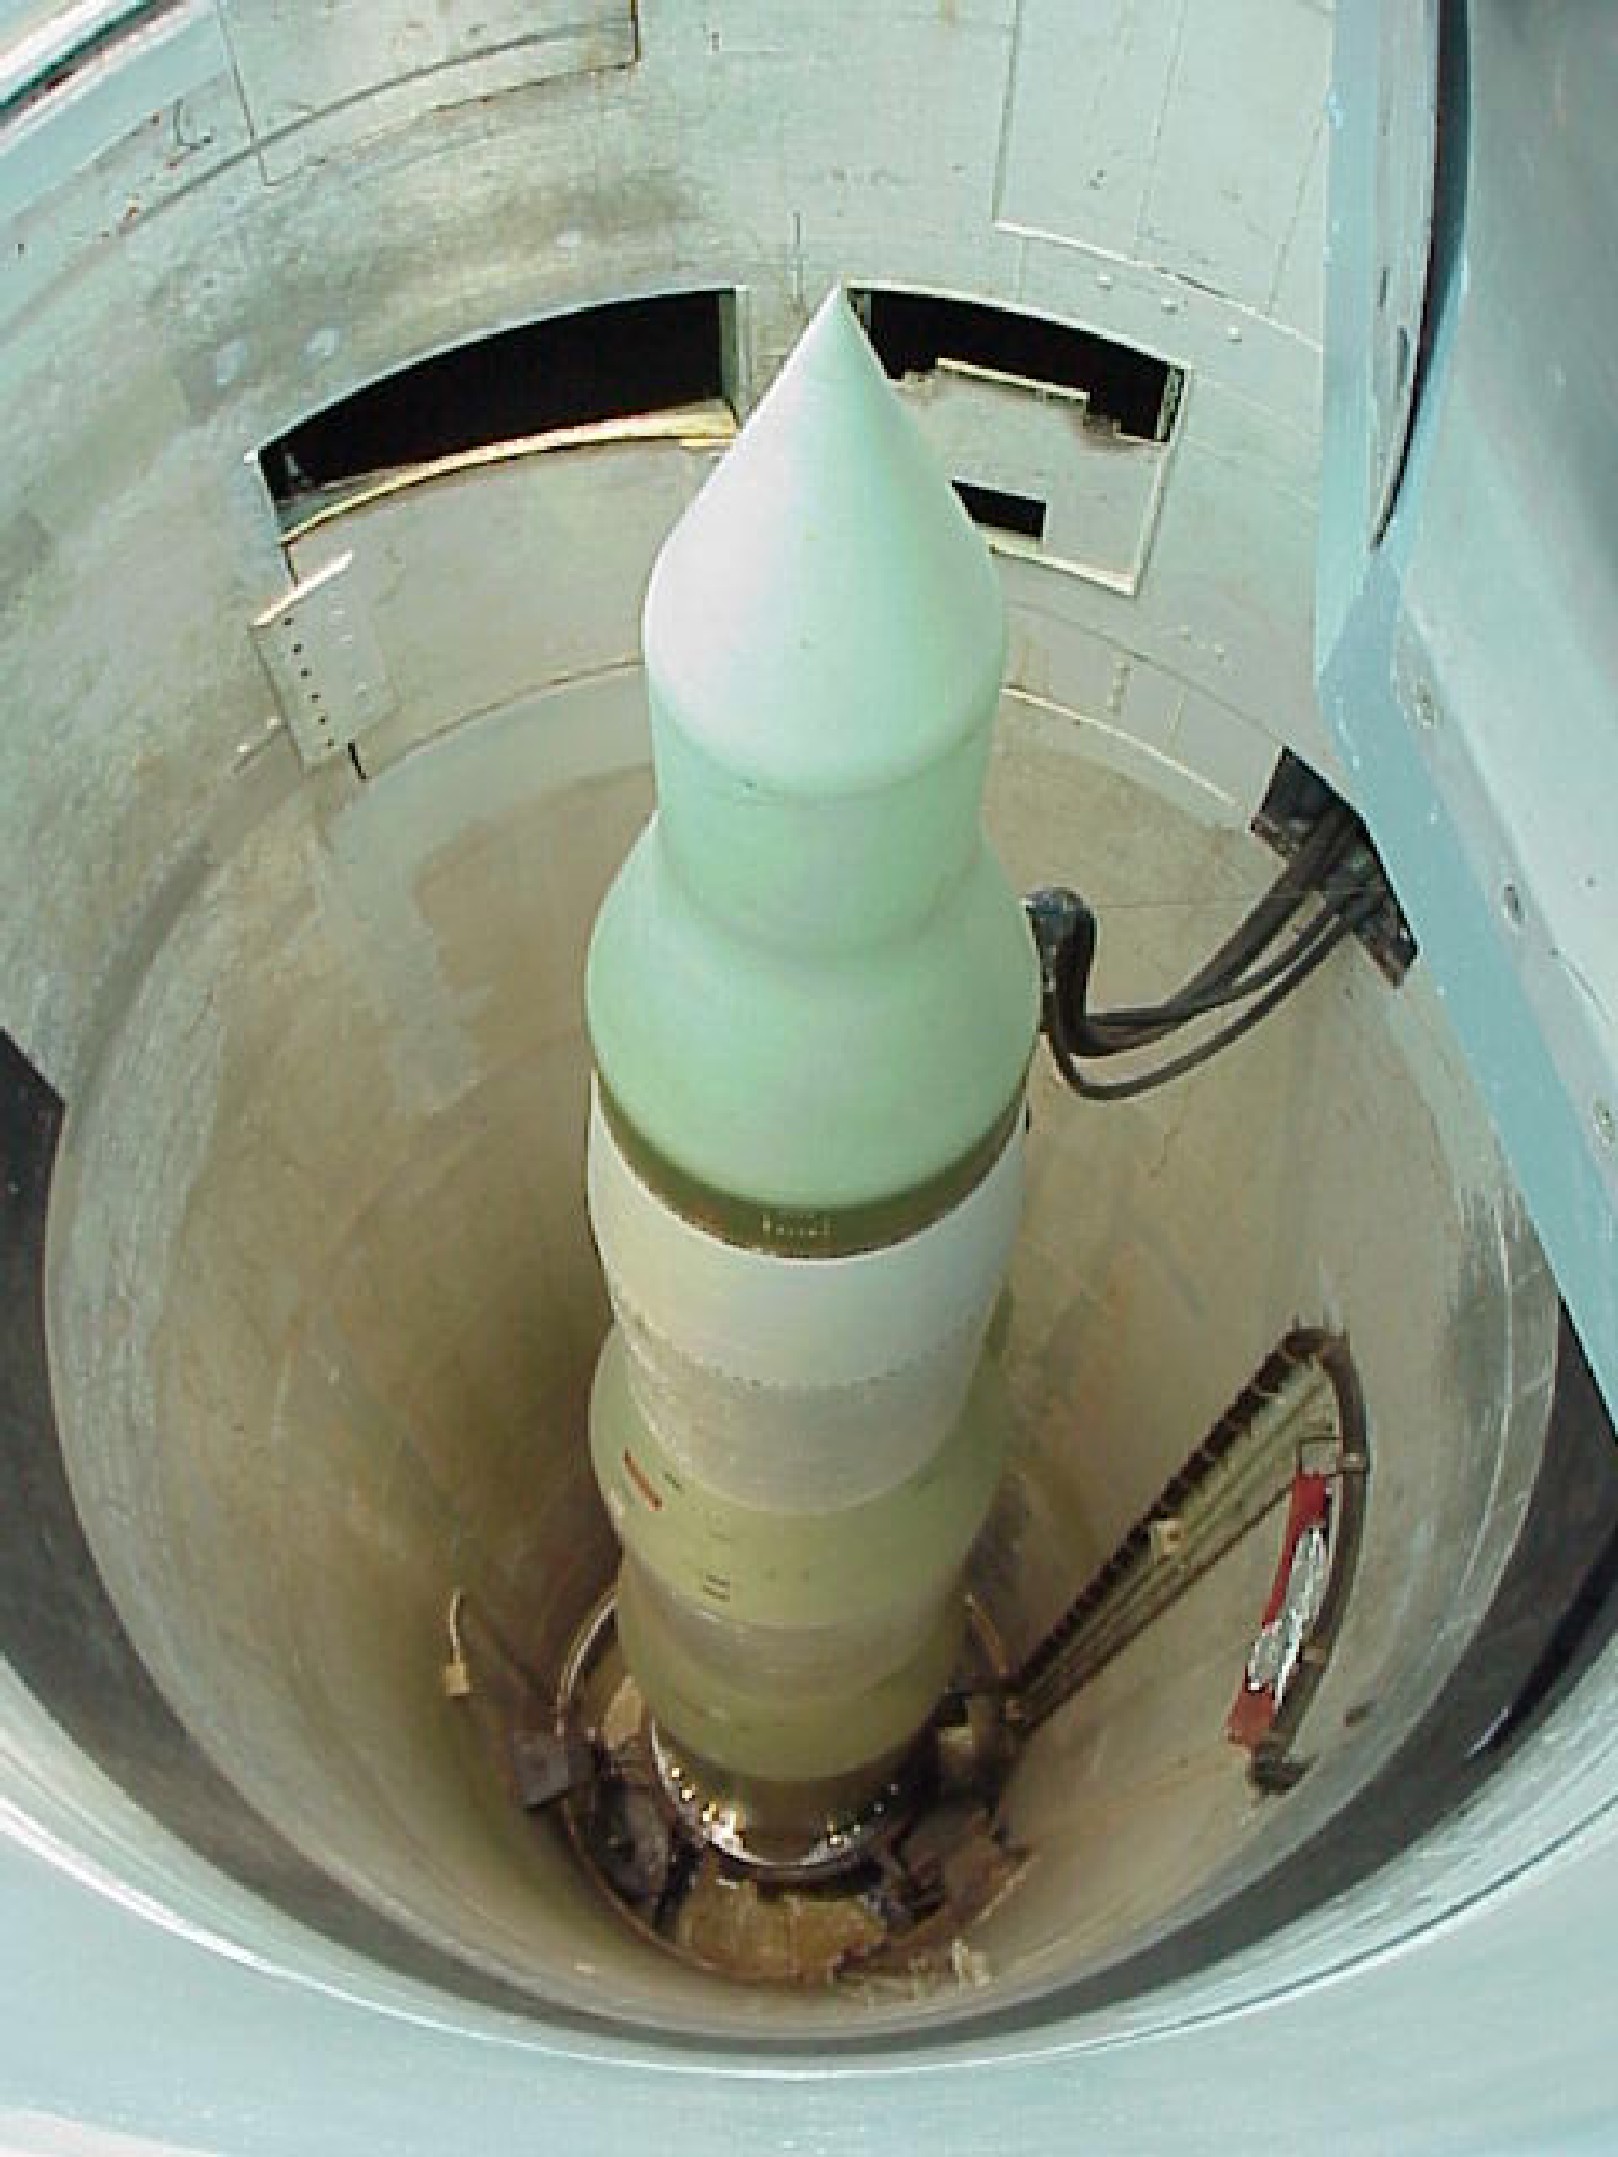 /ra/south-dakota/minuteman_missile_sd.jpg